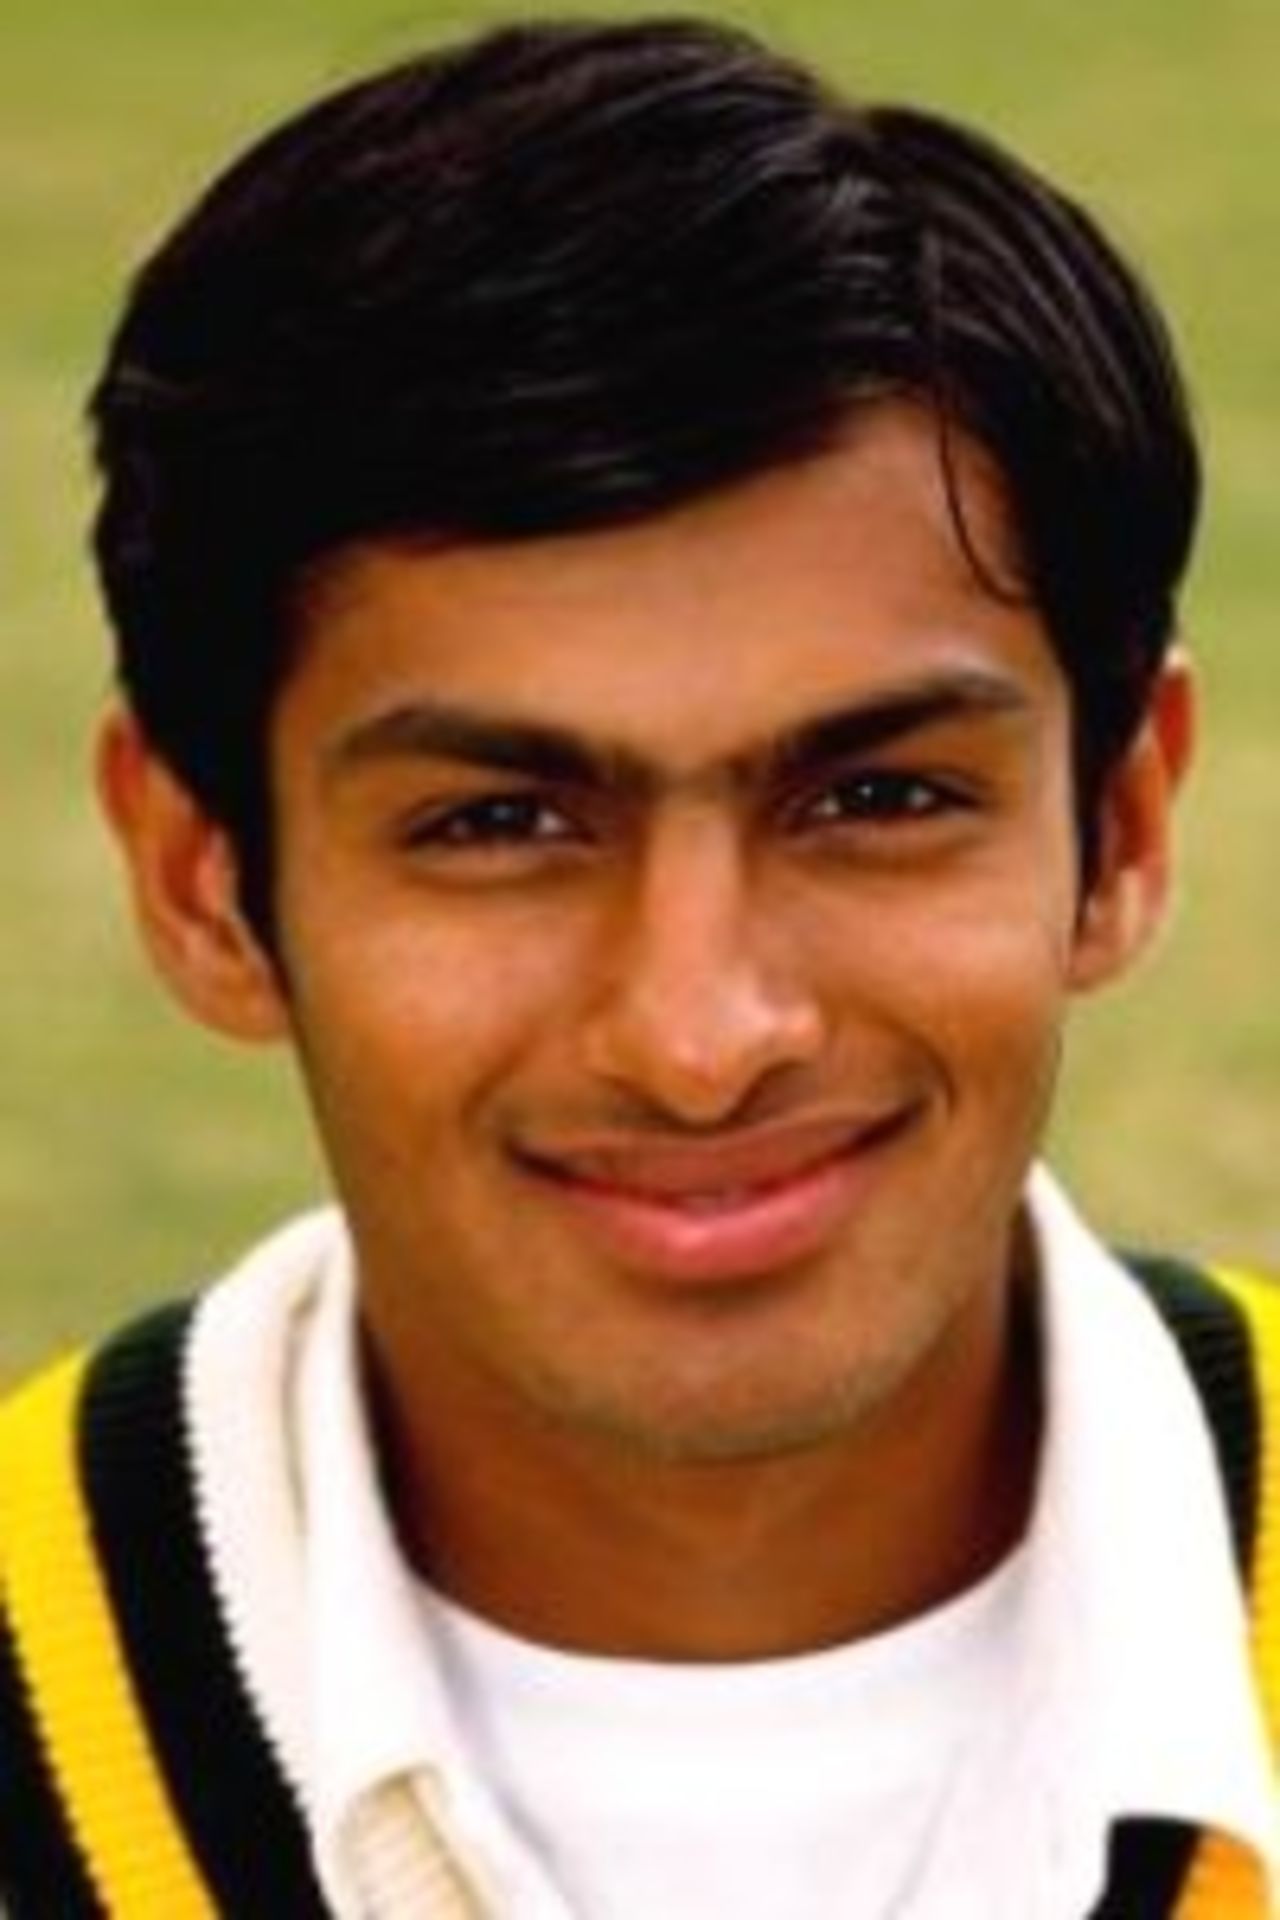 31 Aug 1998: A portrait of Shoaib Malik of Pakistan during a match between England U19 v Pakistan U19 played at Chelmsford, Essex, England